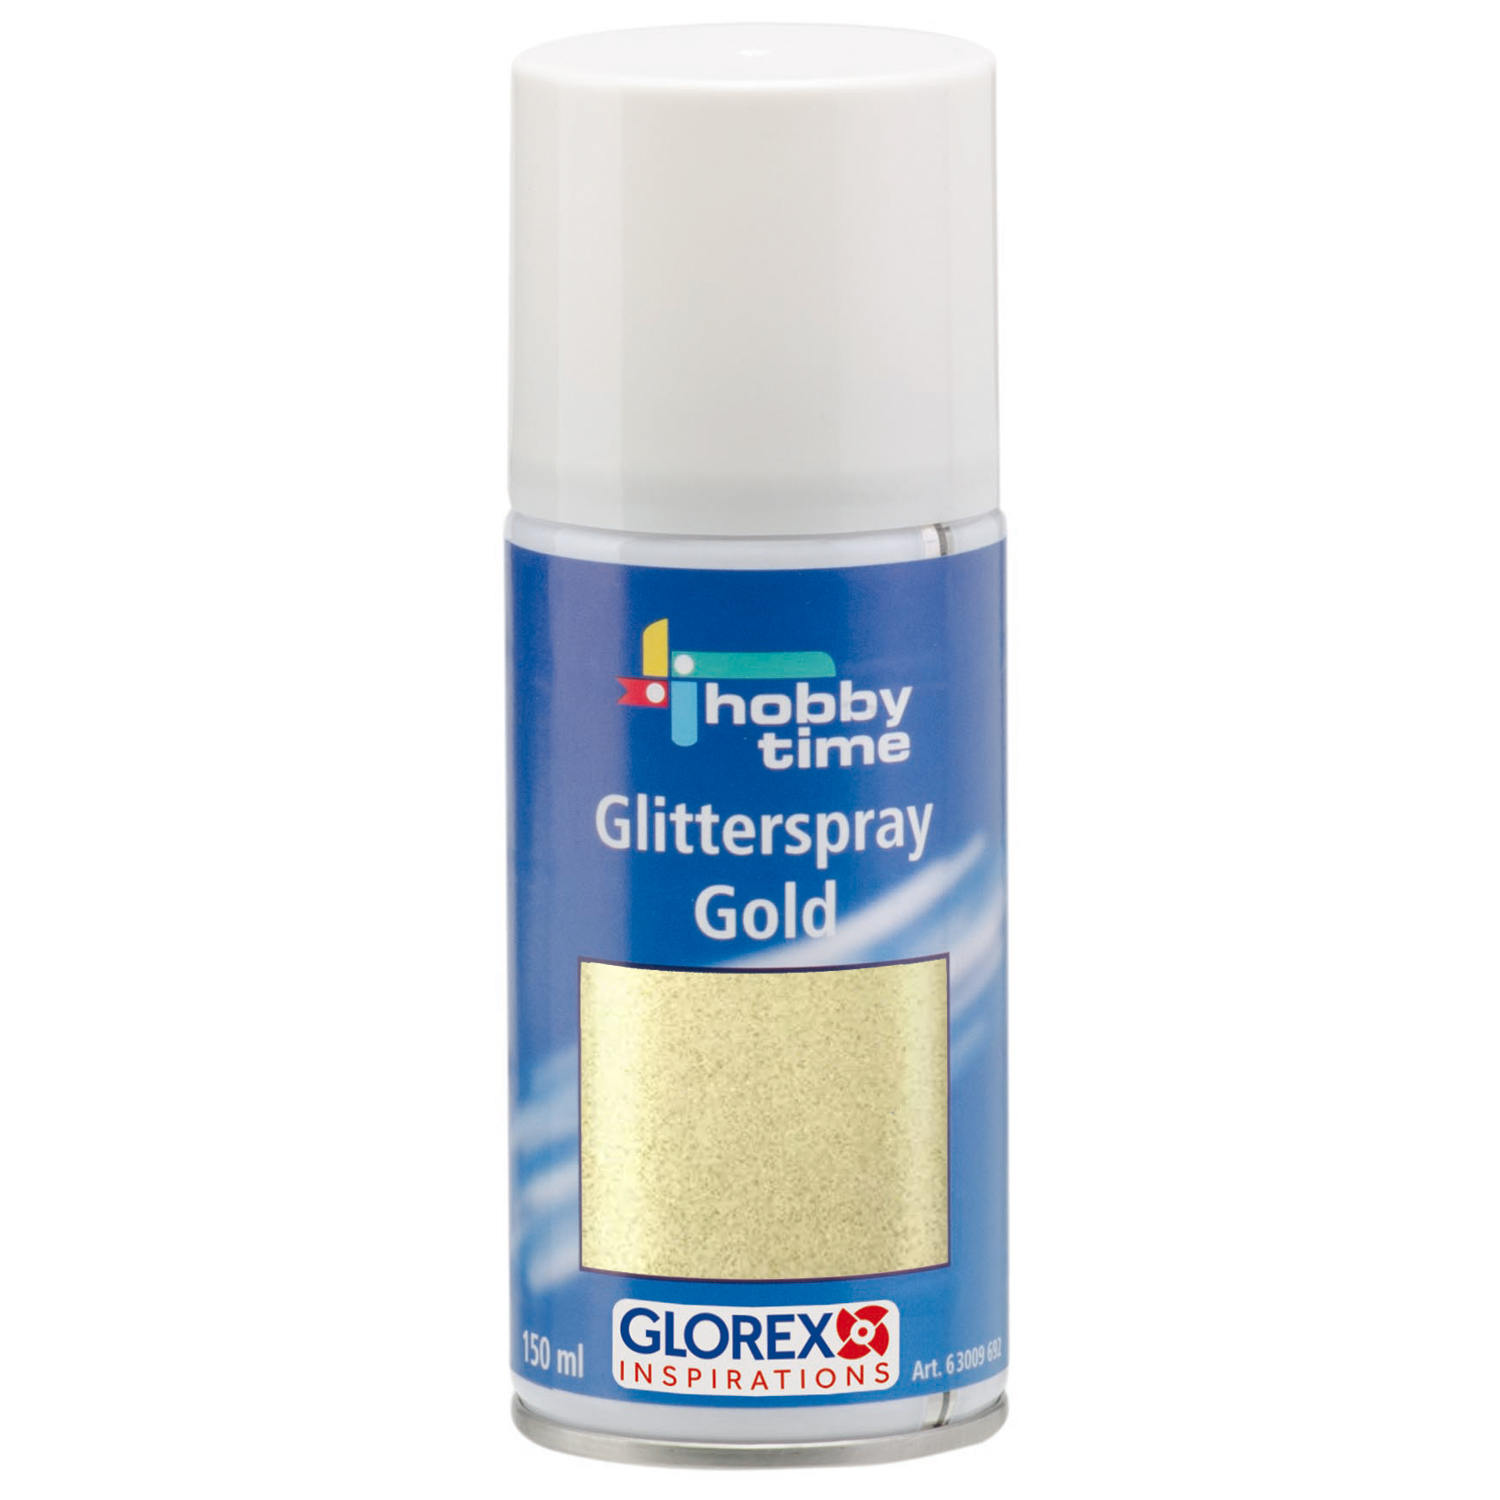 NEU Glitterspray Gold / Glittergold, 150 ml